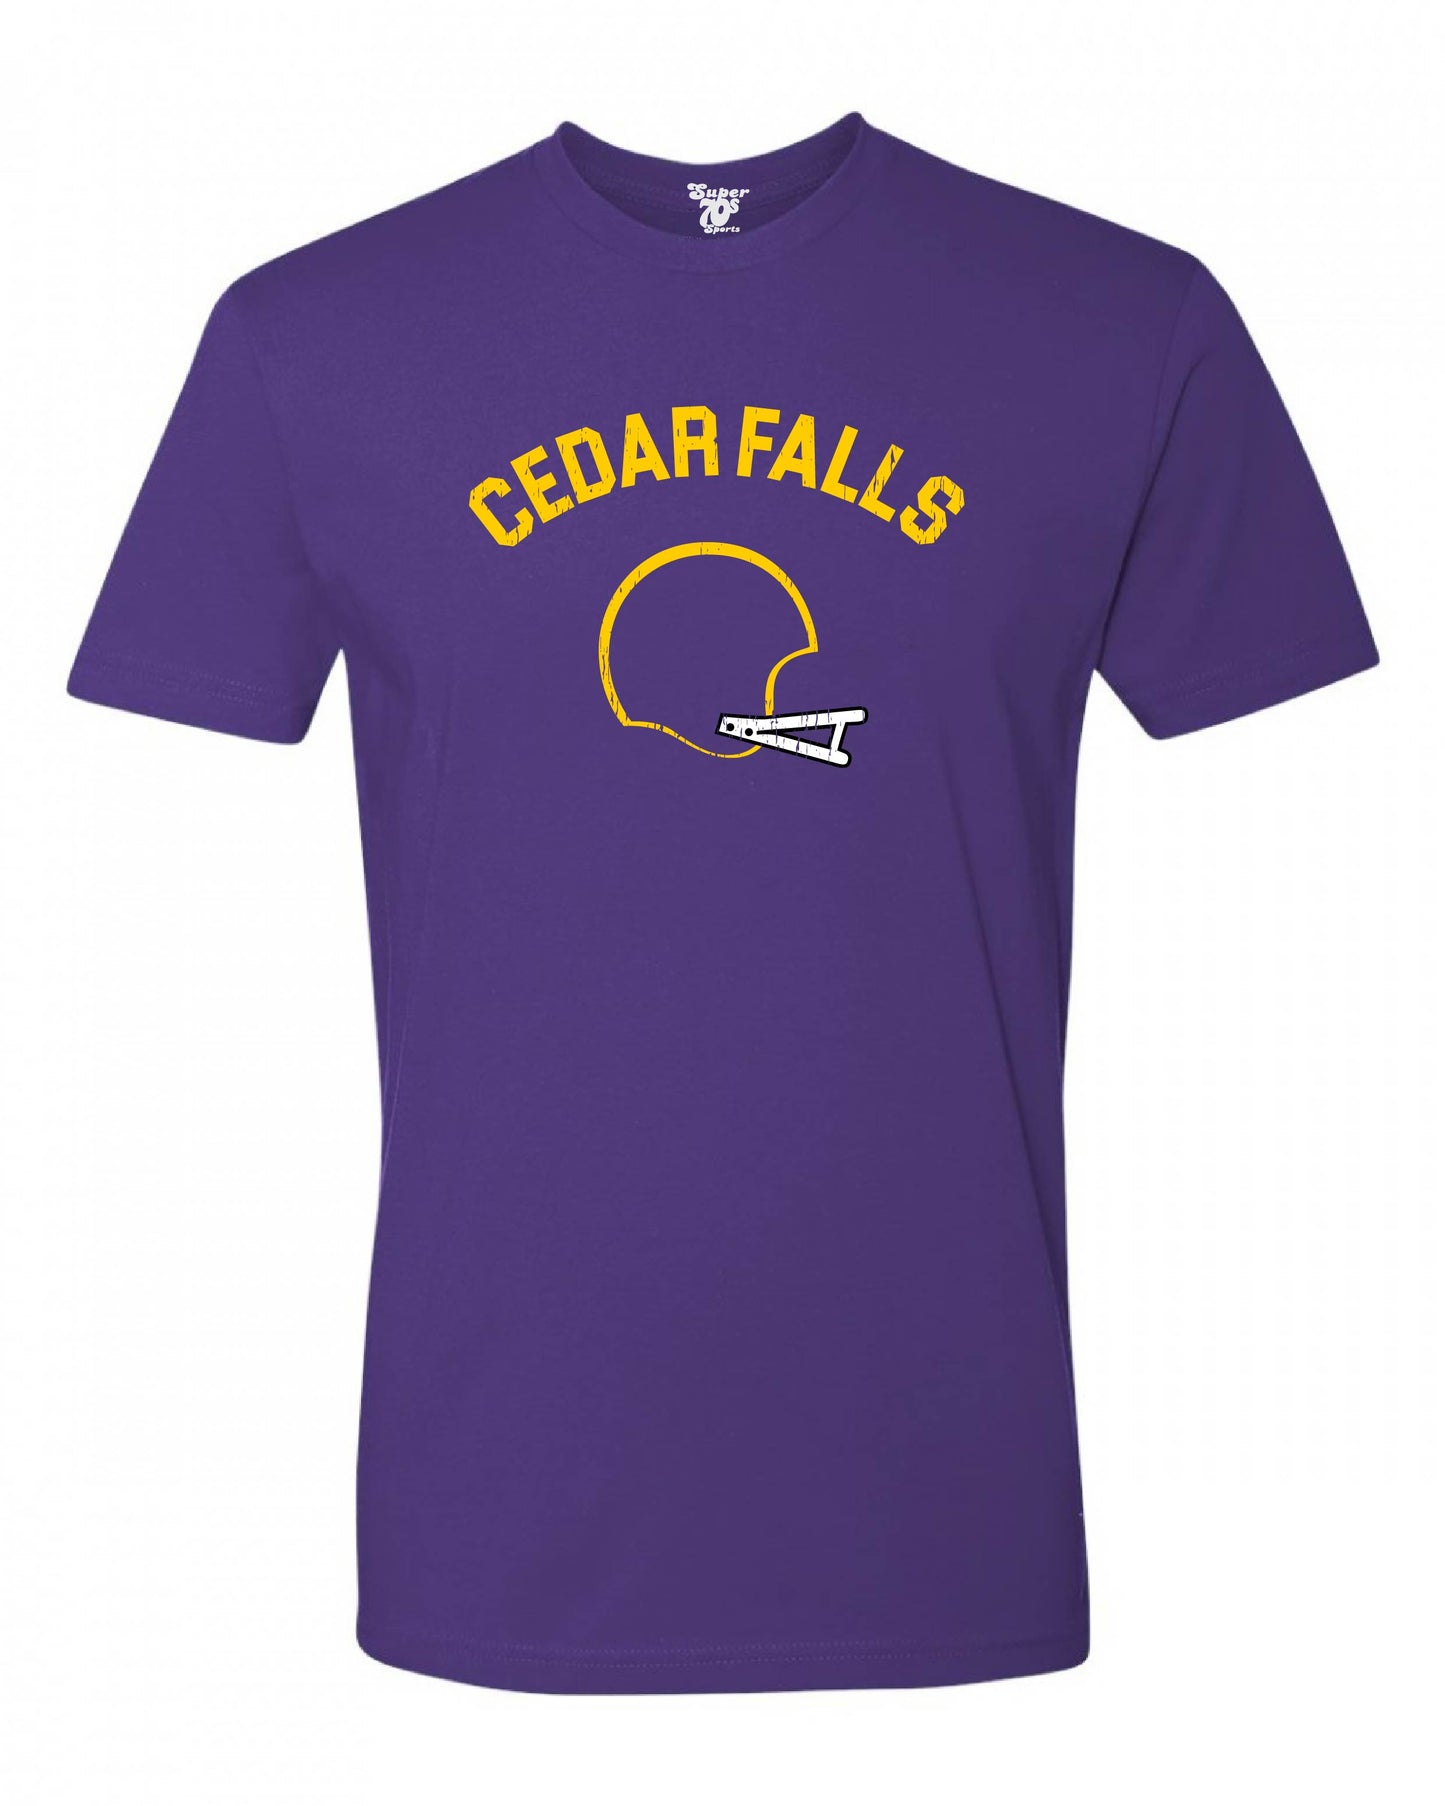 Cedar Falls Football Tee